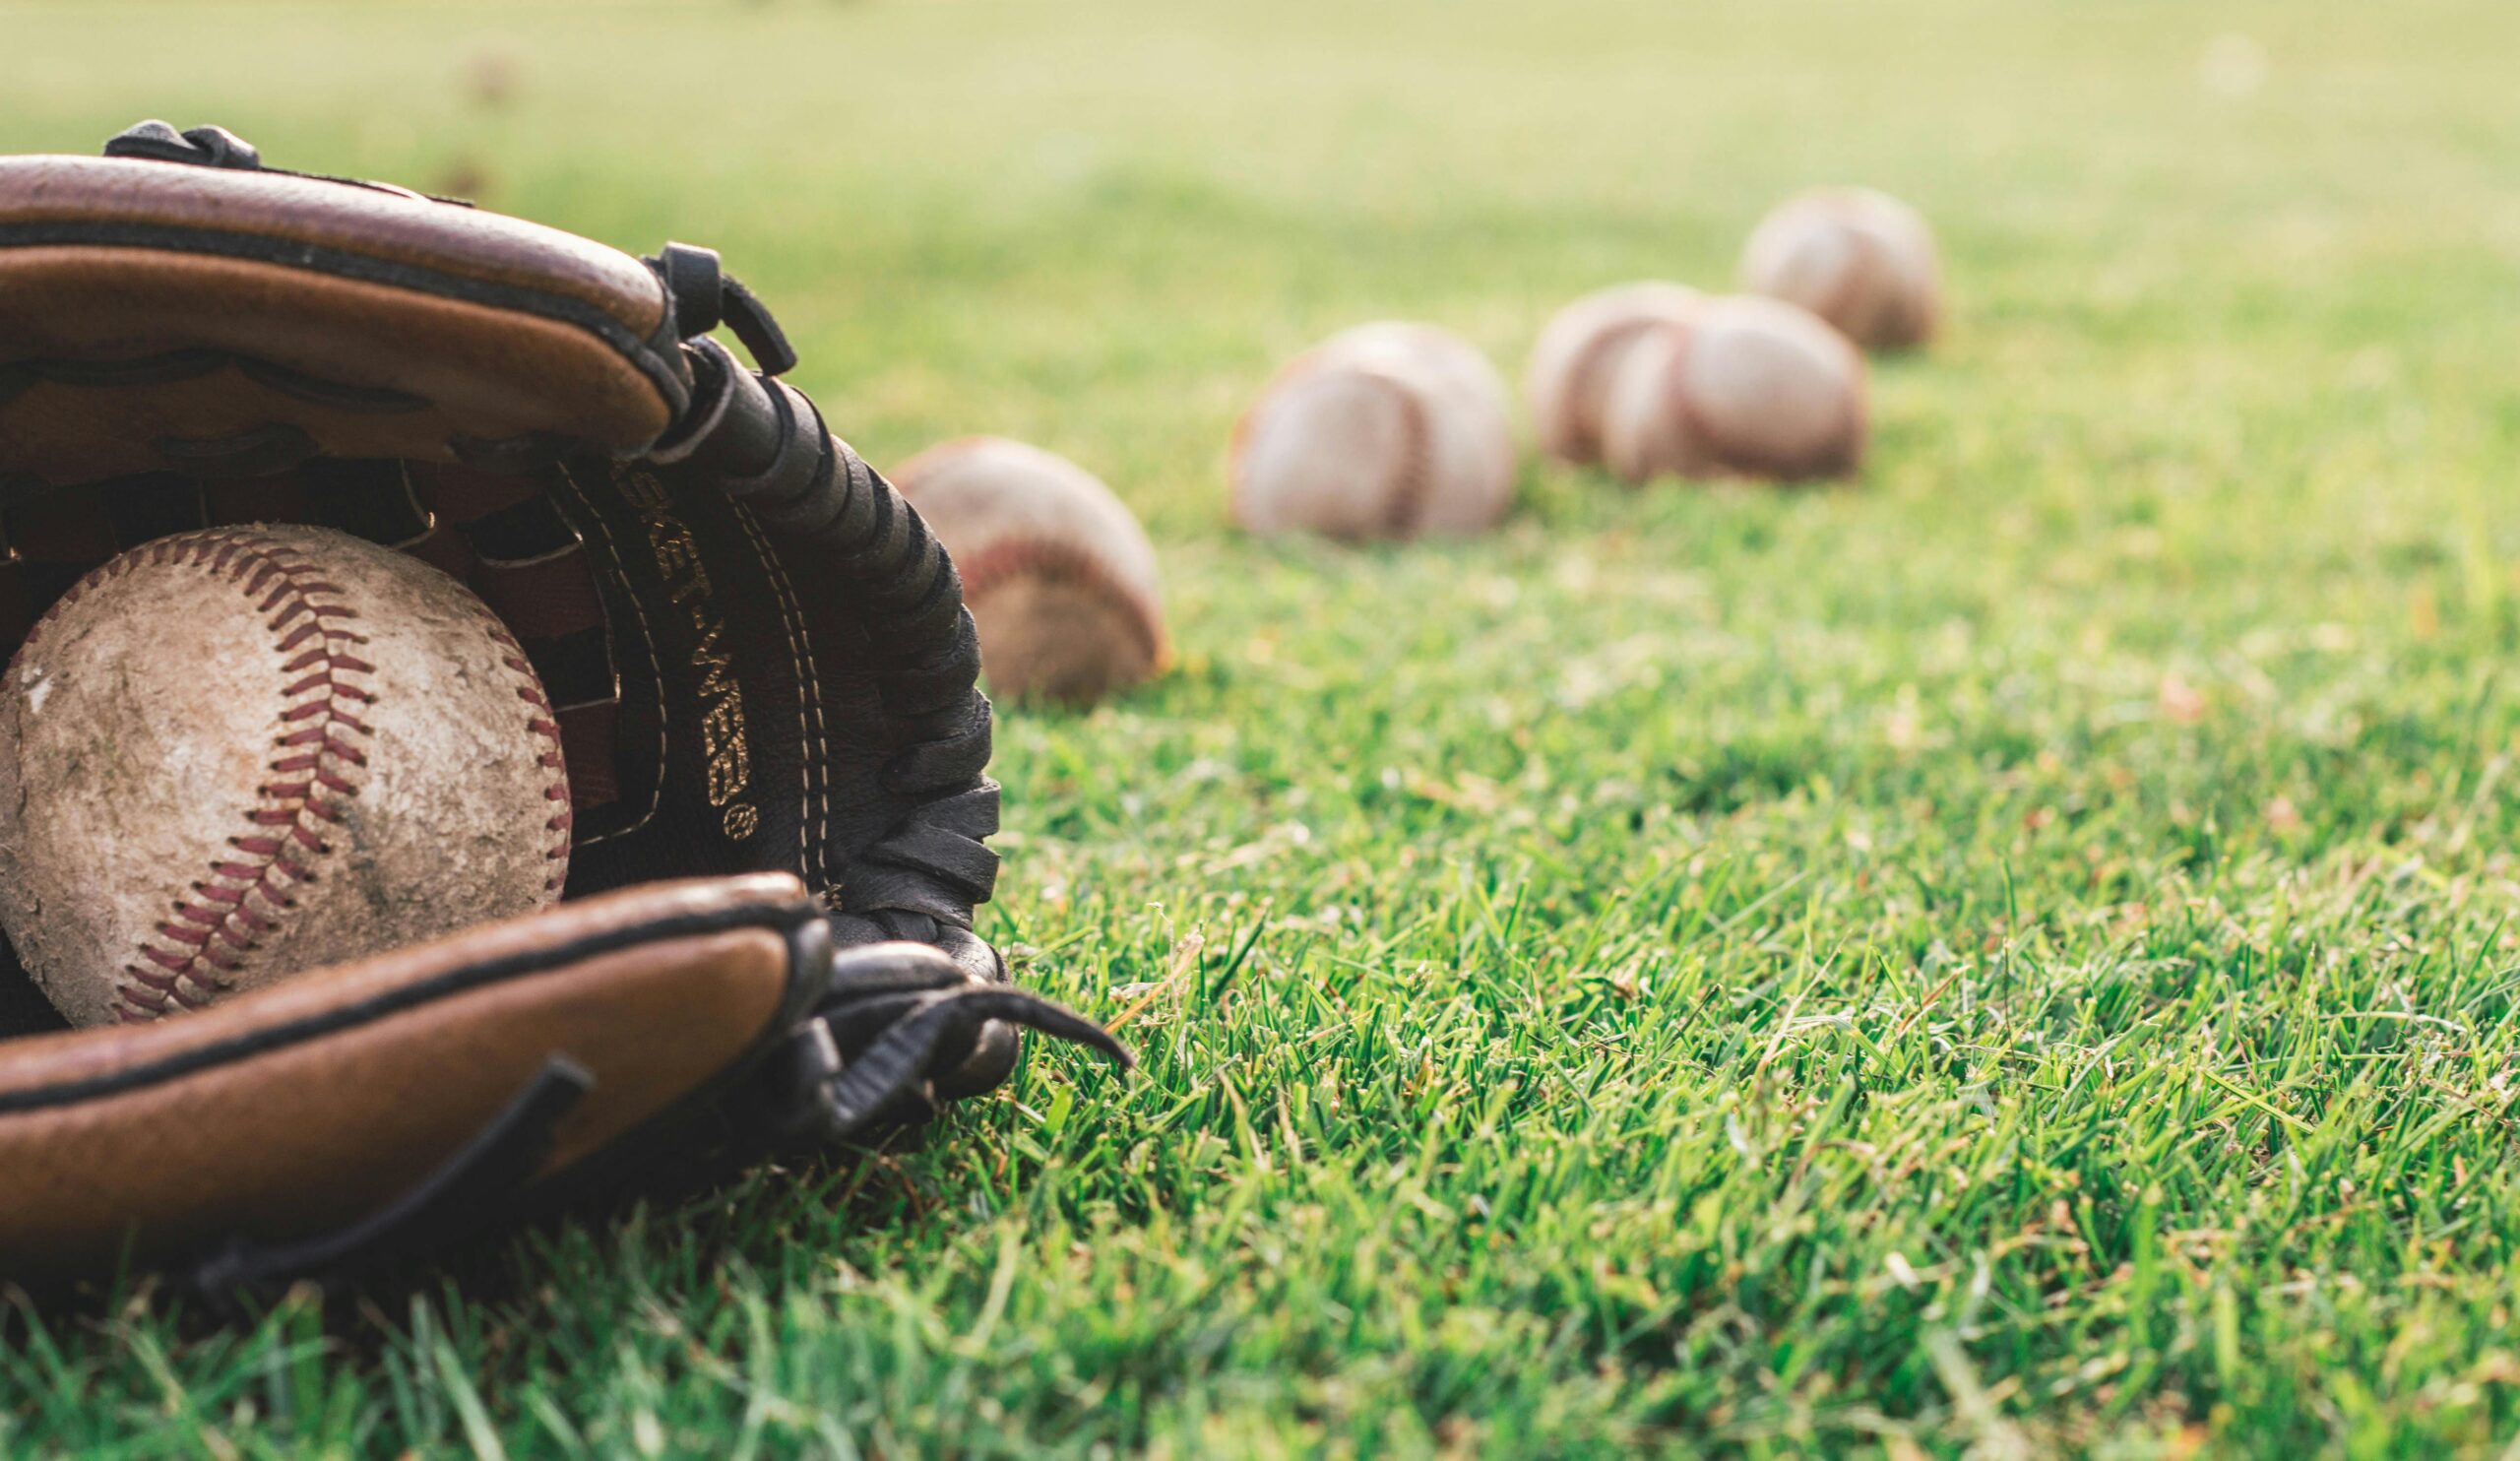 Baseball glove with baseballs on field